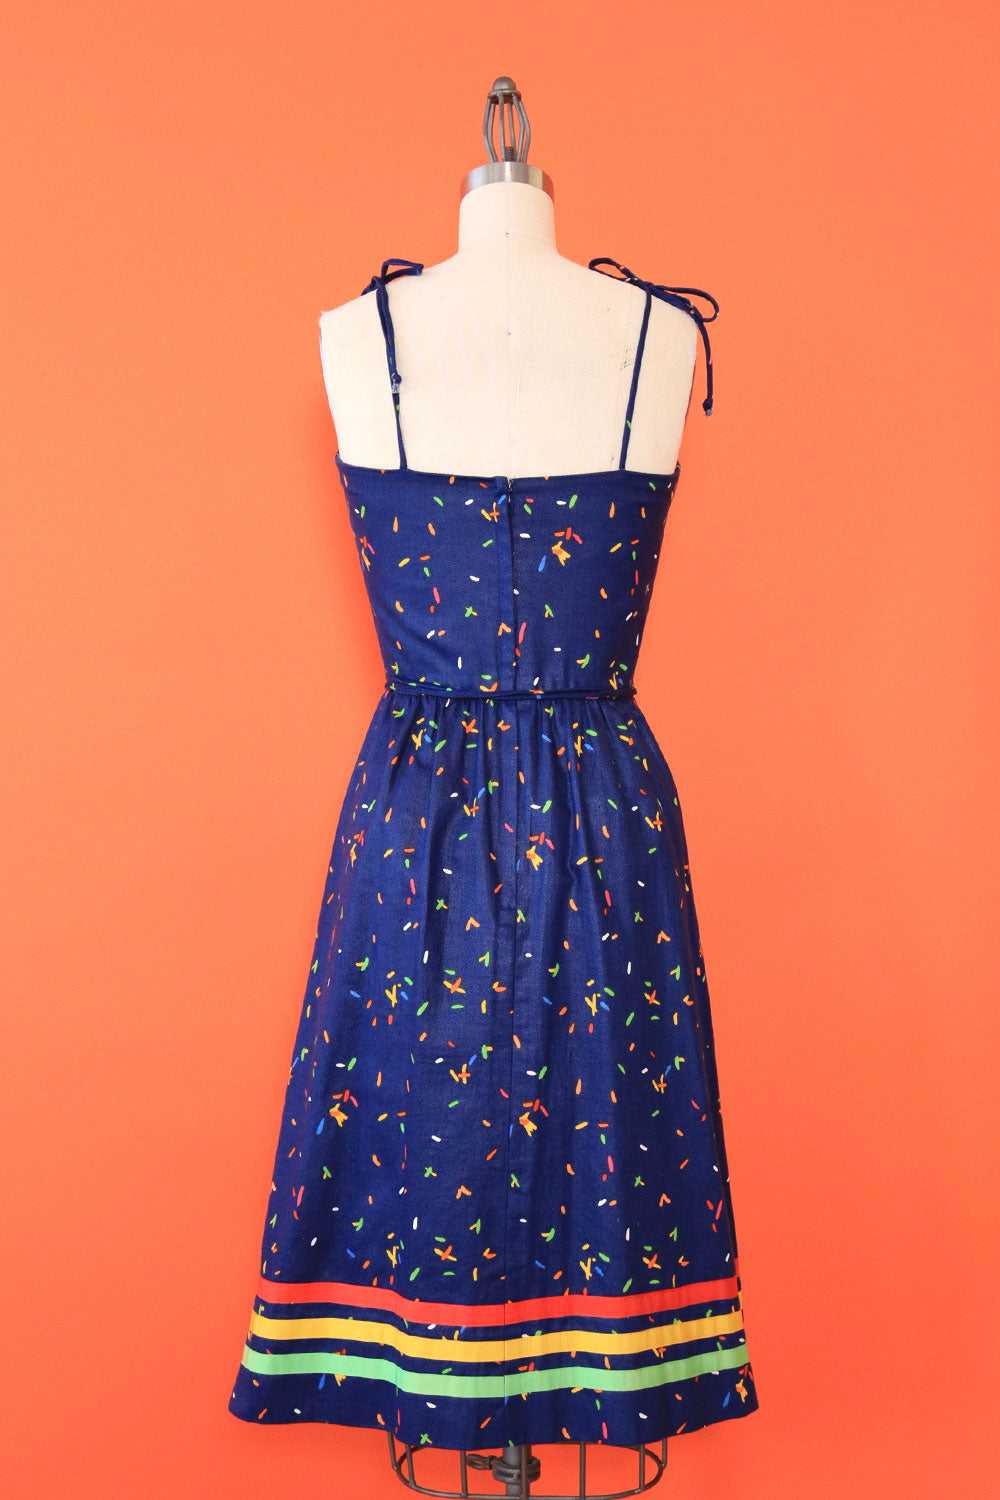 Blair Woolverton Cotton Confetti Dress XS - image 4